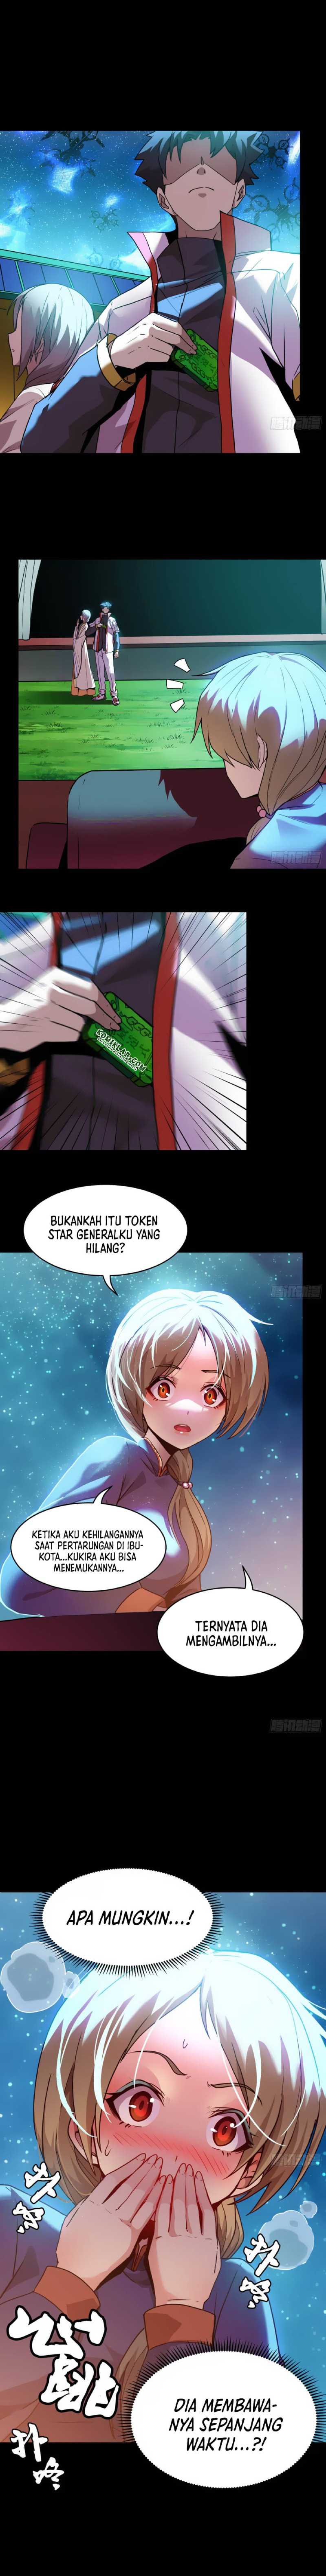 Legend of Star General Chapter 71